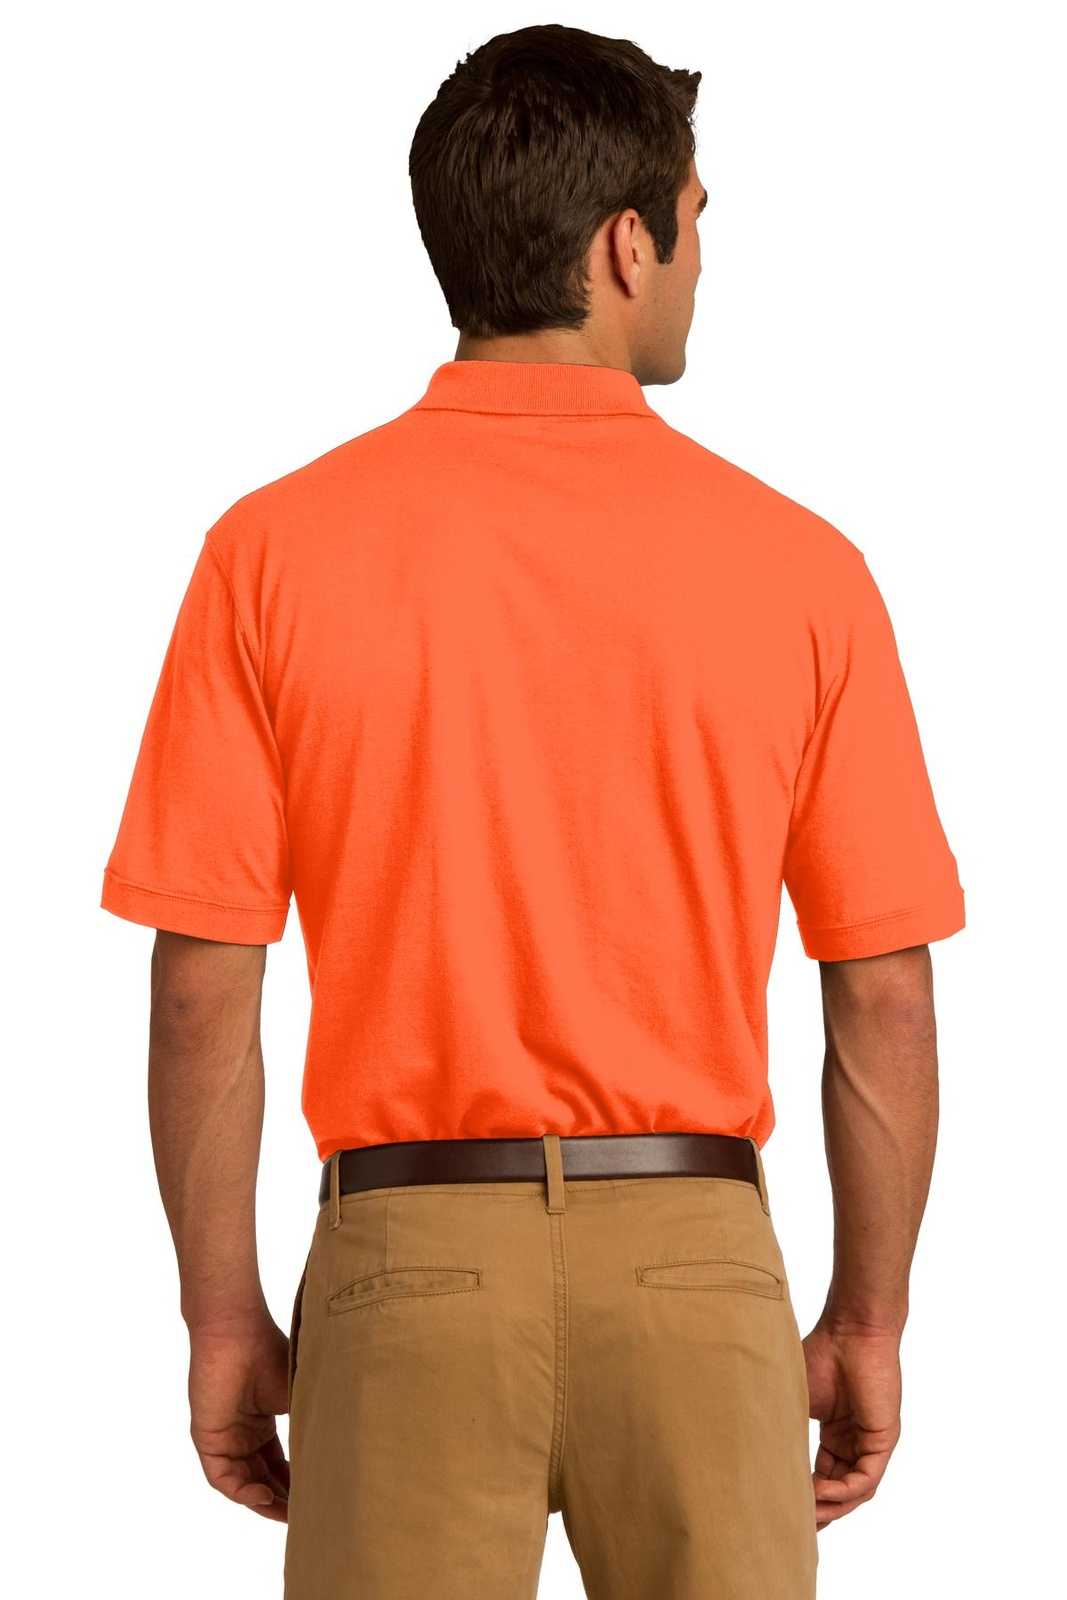 Port & Company KP55P Core Blend Jersey Knit Pocket Polo - Safety Orange - HIT a Double - 1